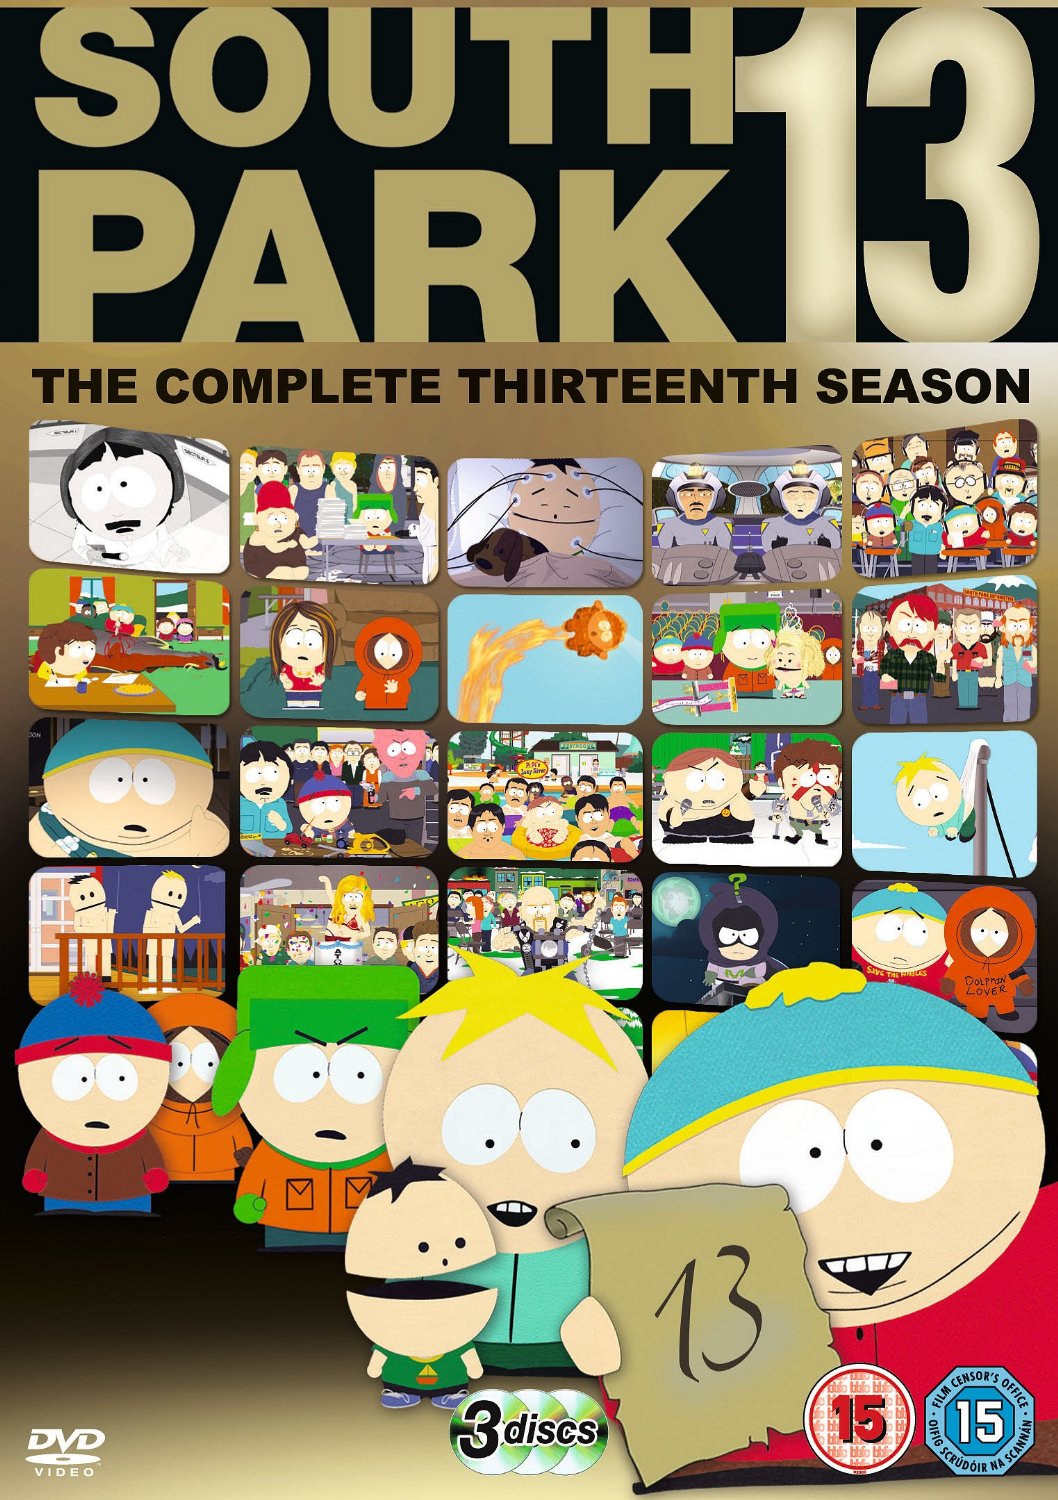 south park season 5 episode 3 summary